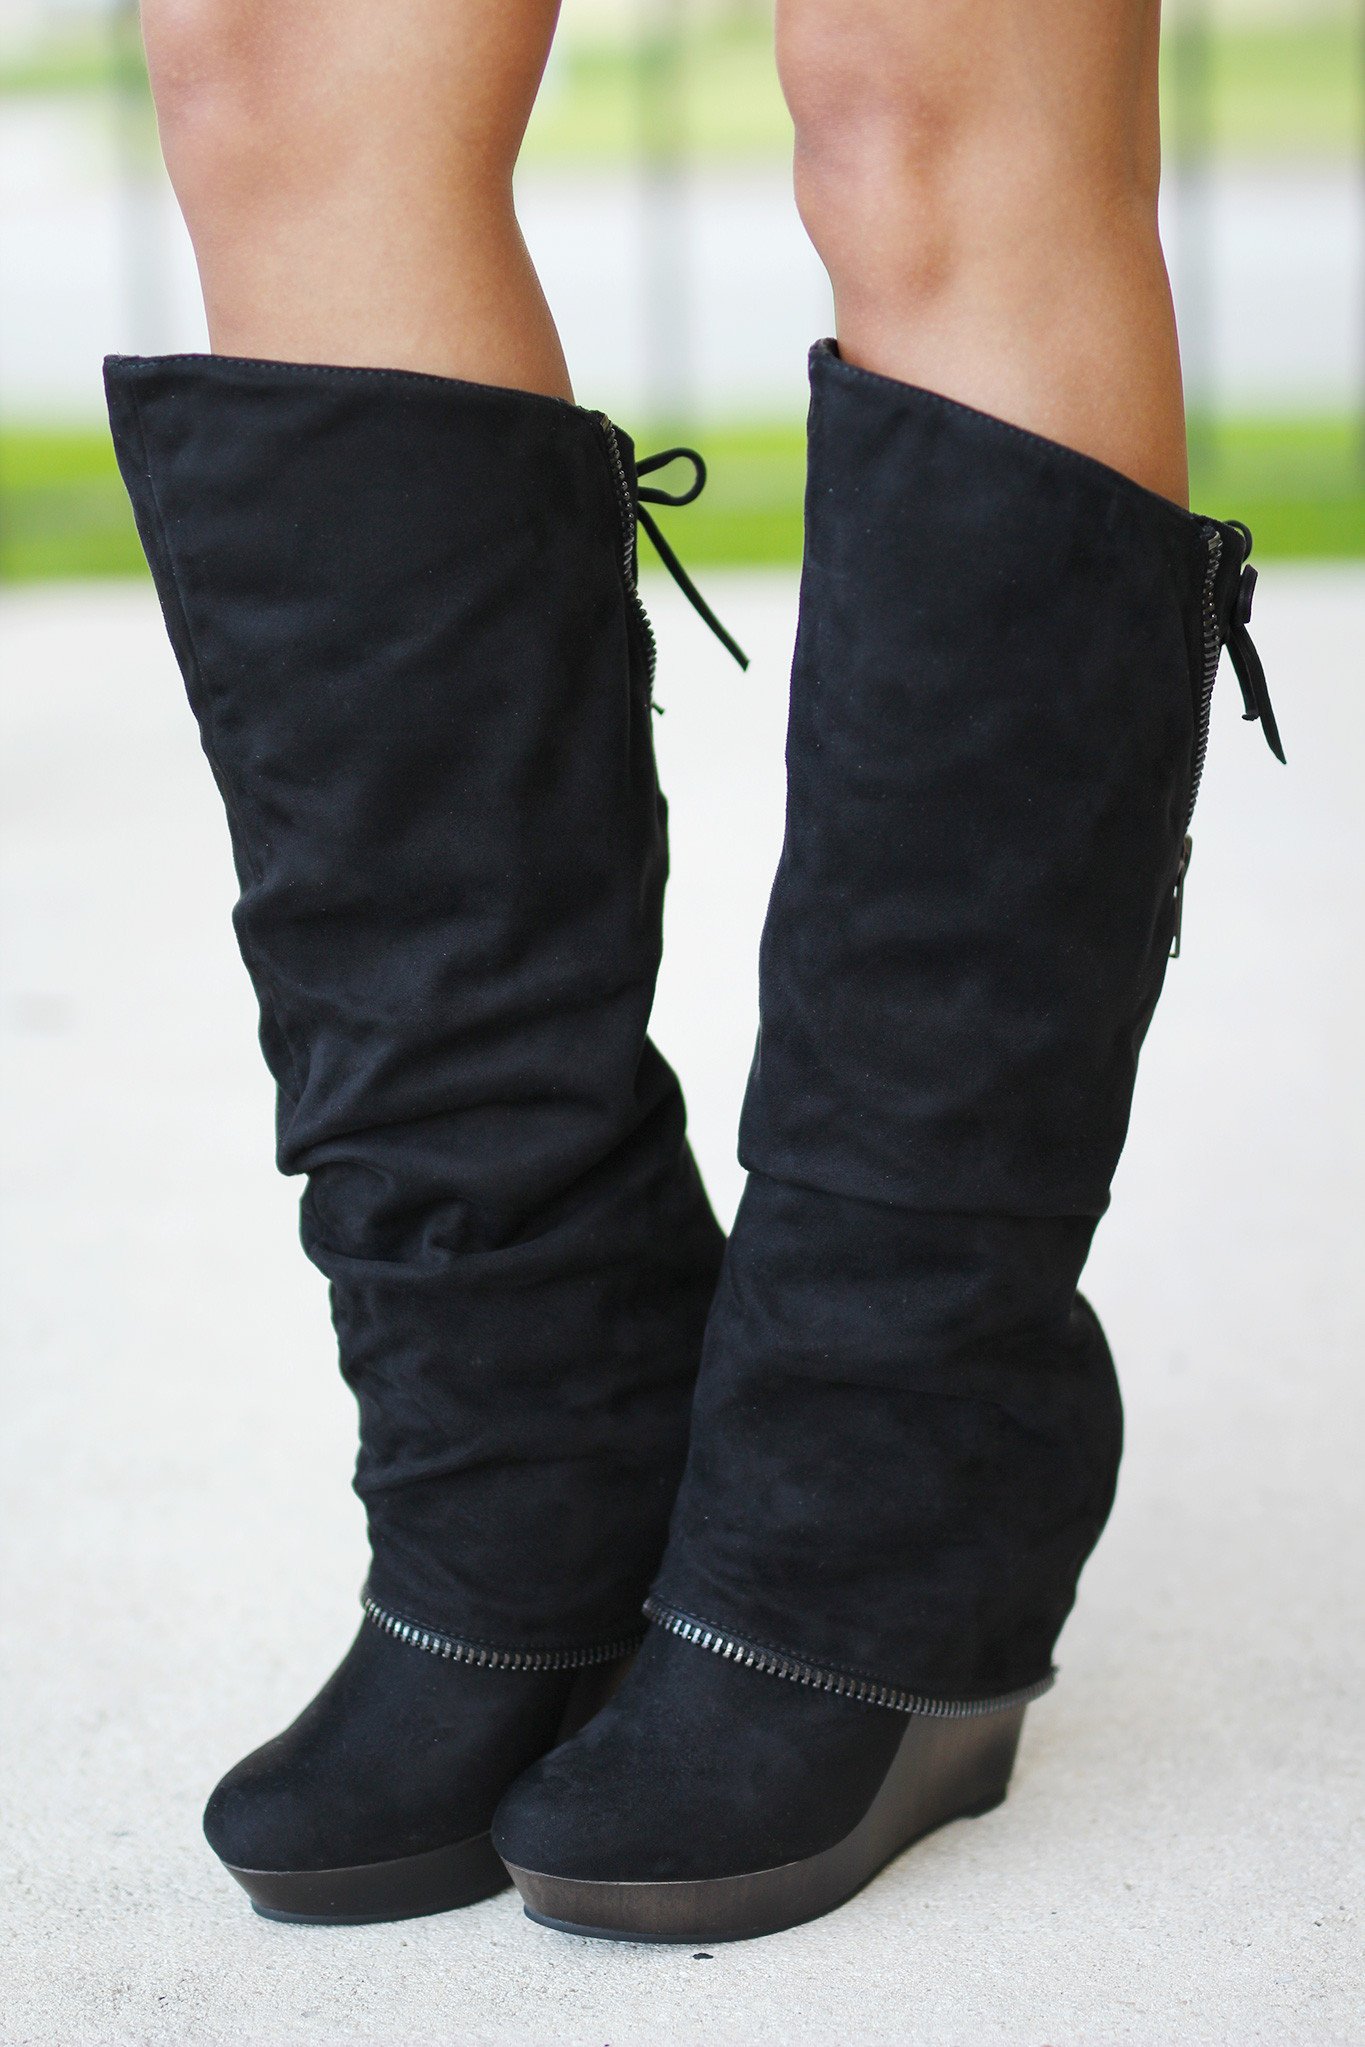 The versatile black wedge boots